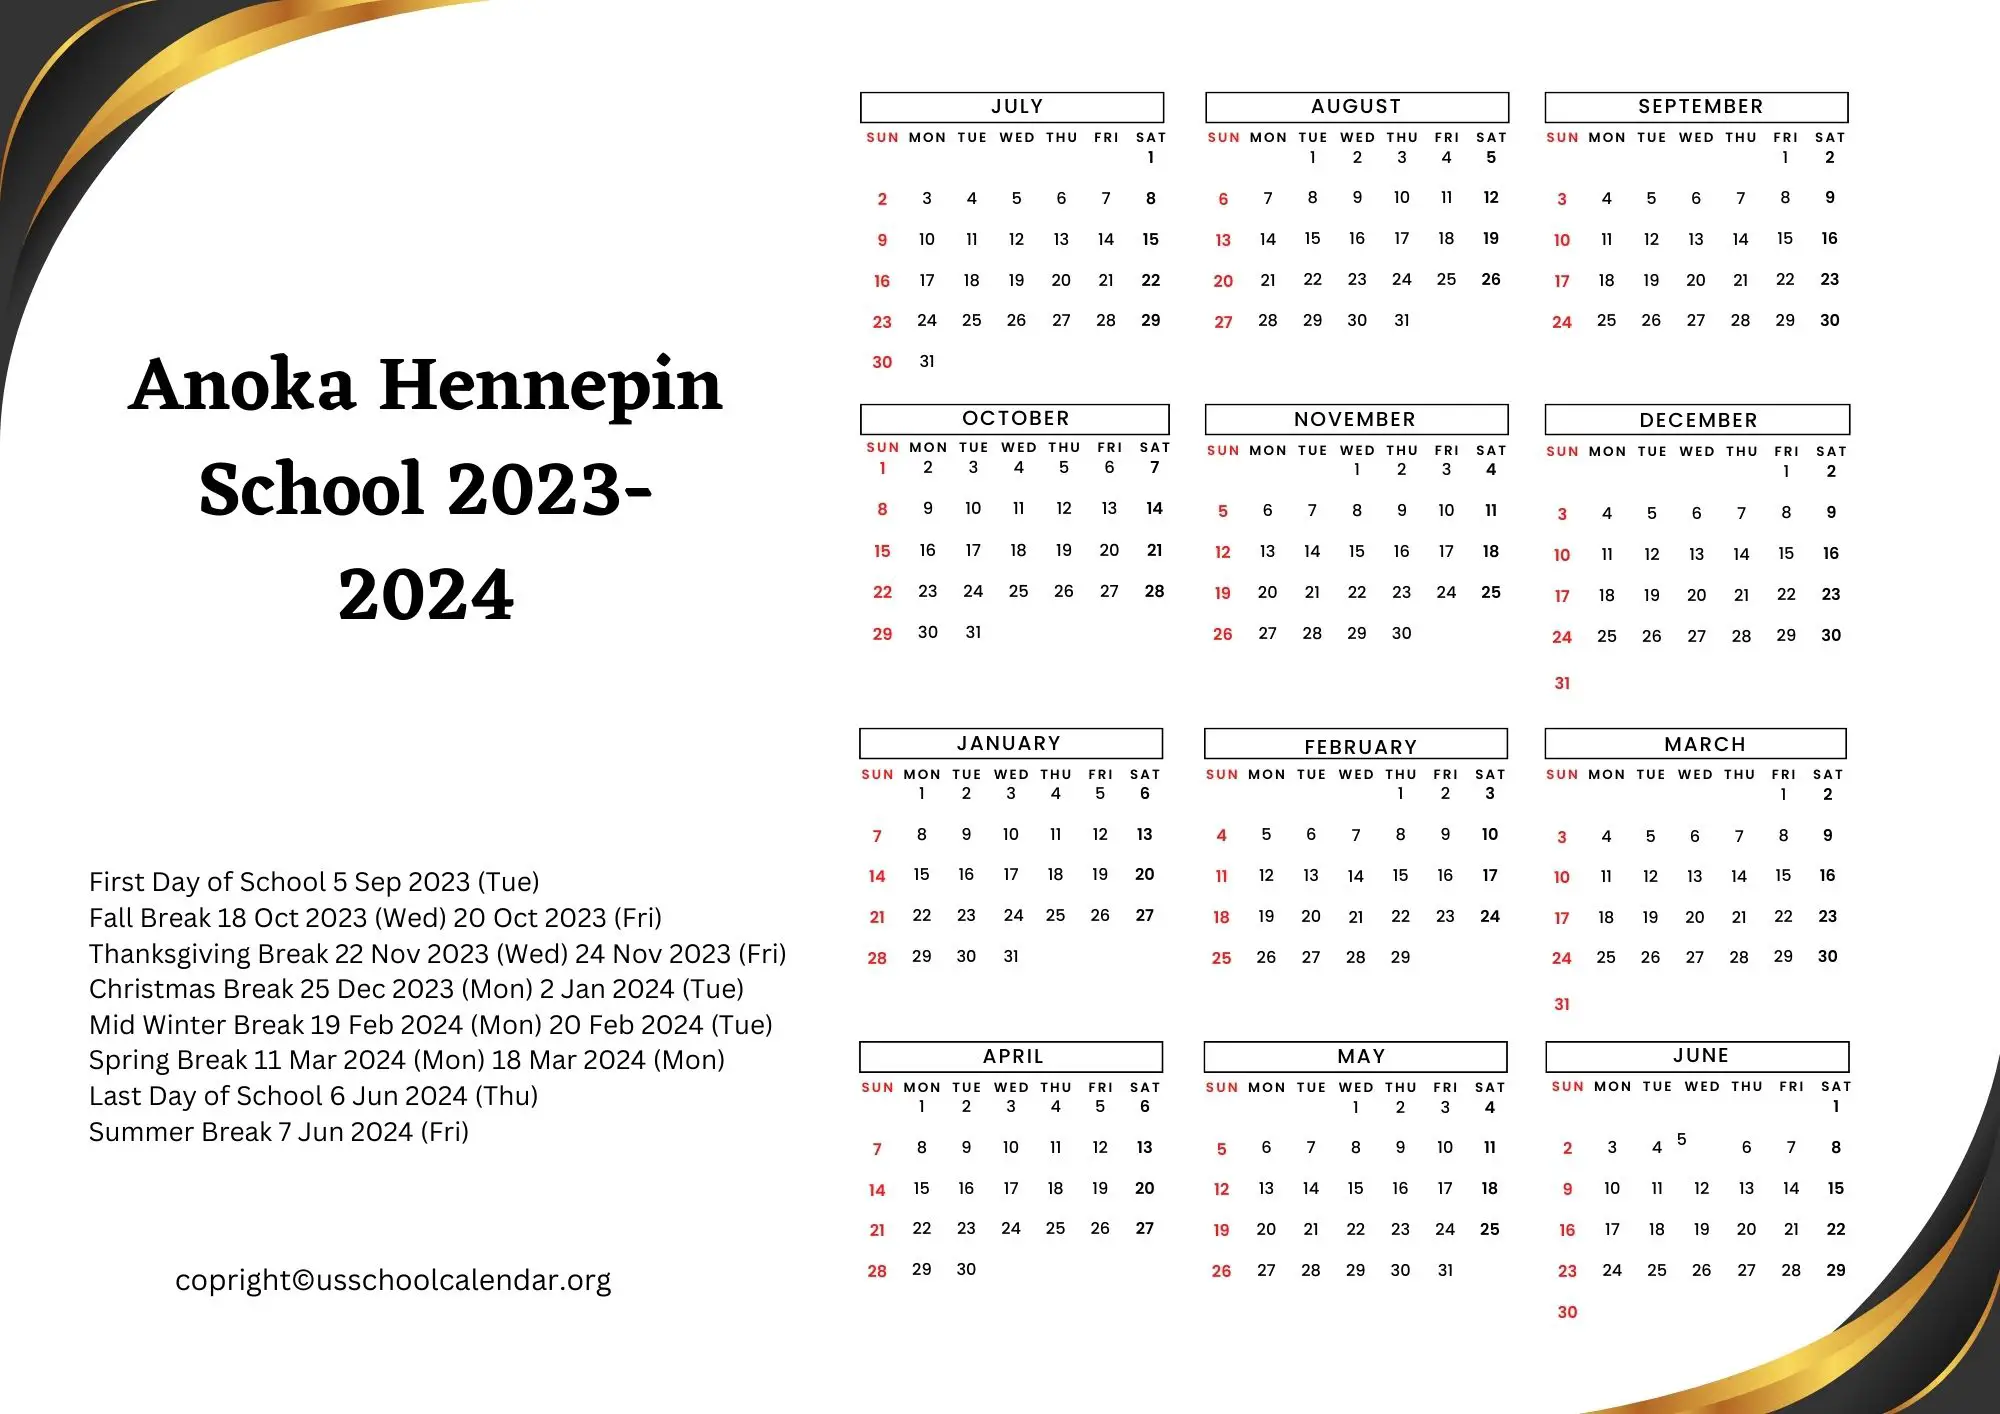 anoka-hennepin-school-calendar-with-holidays-2023-2024